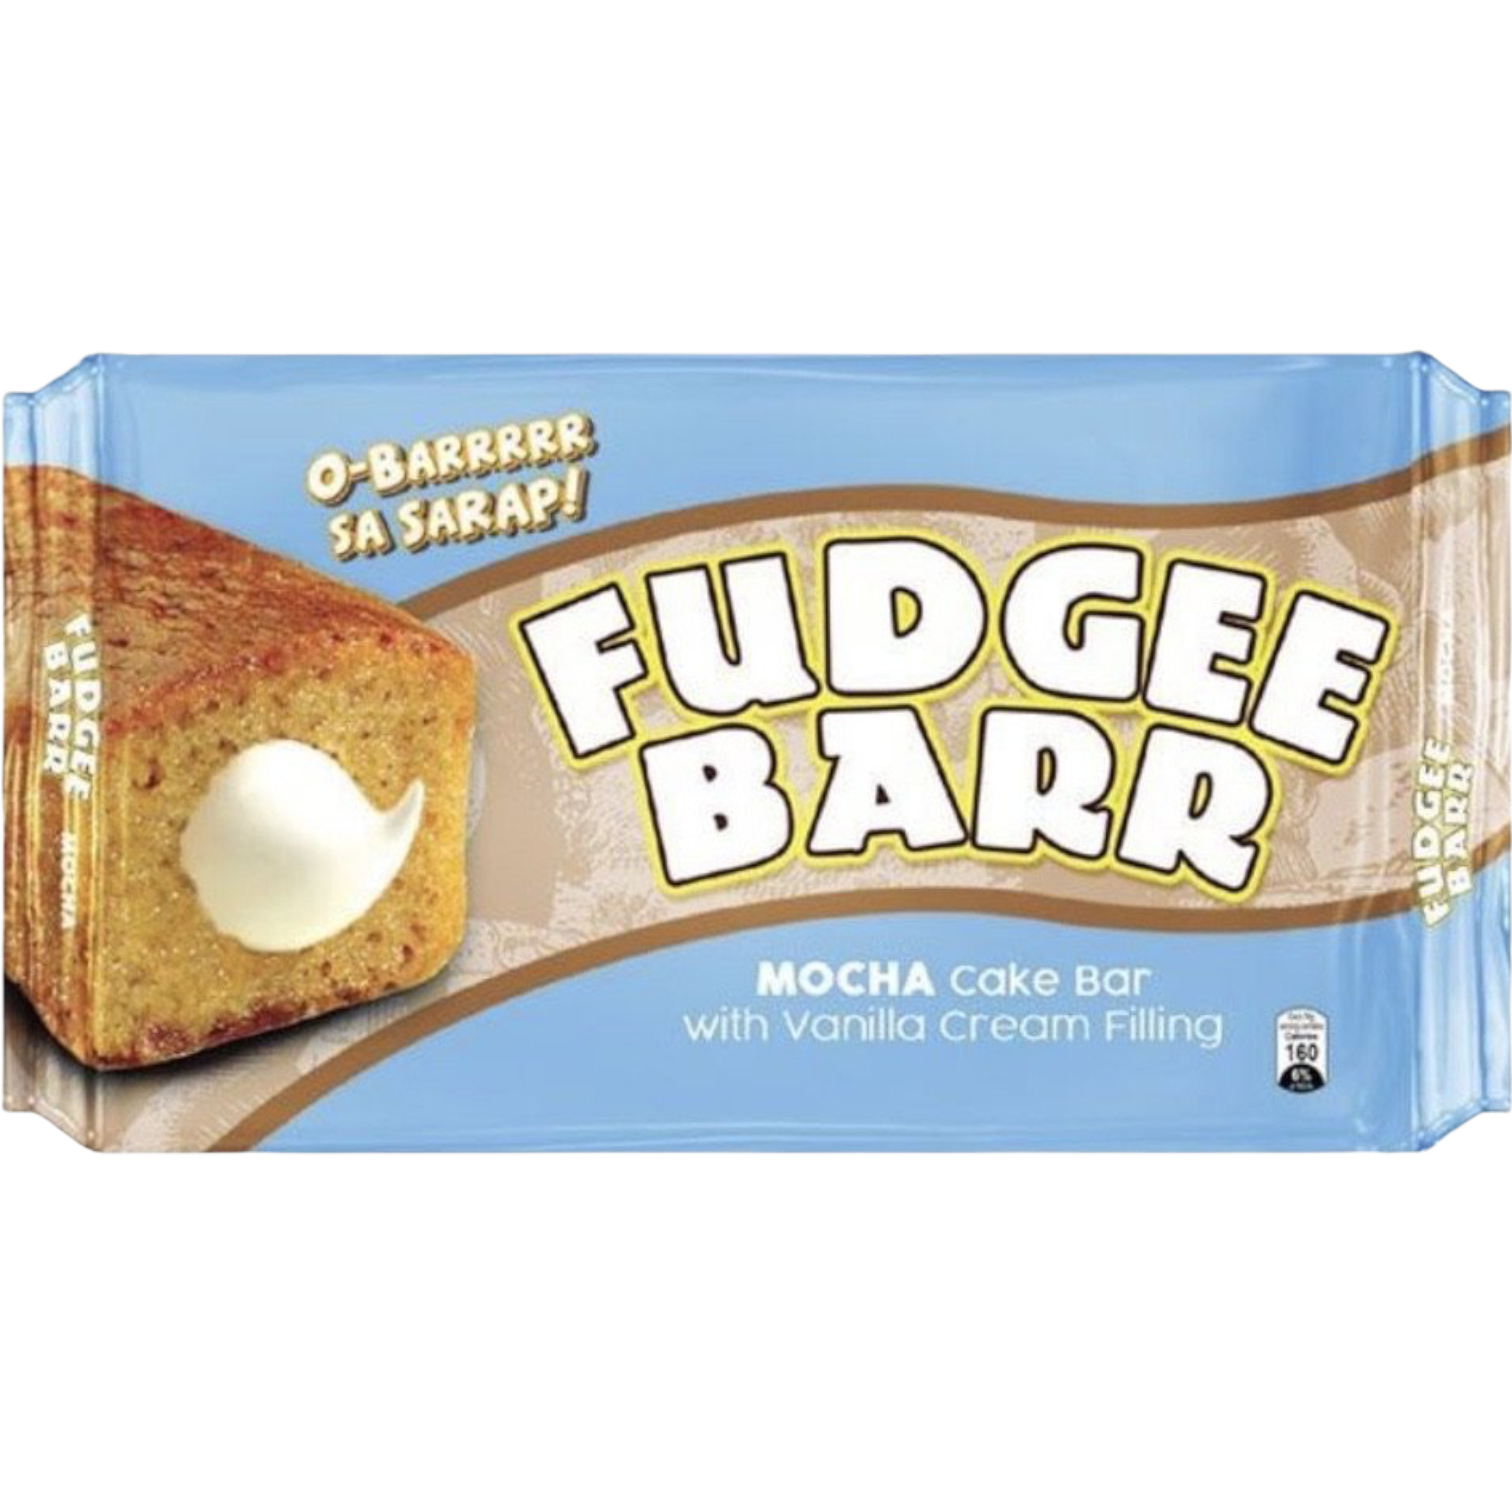 Fudgee Bar Mocha Flavor Cake Bar with Vanilla Cream Filling | Salangi ko pu